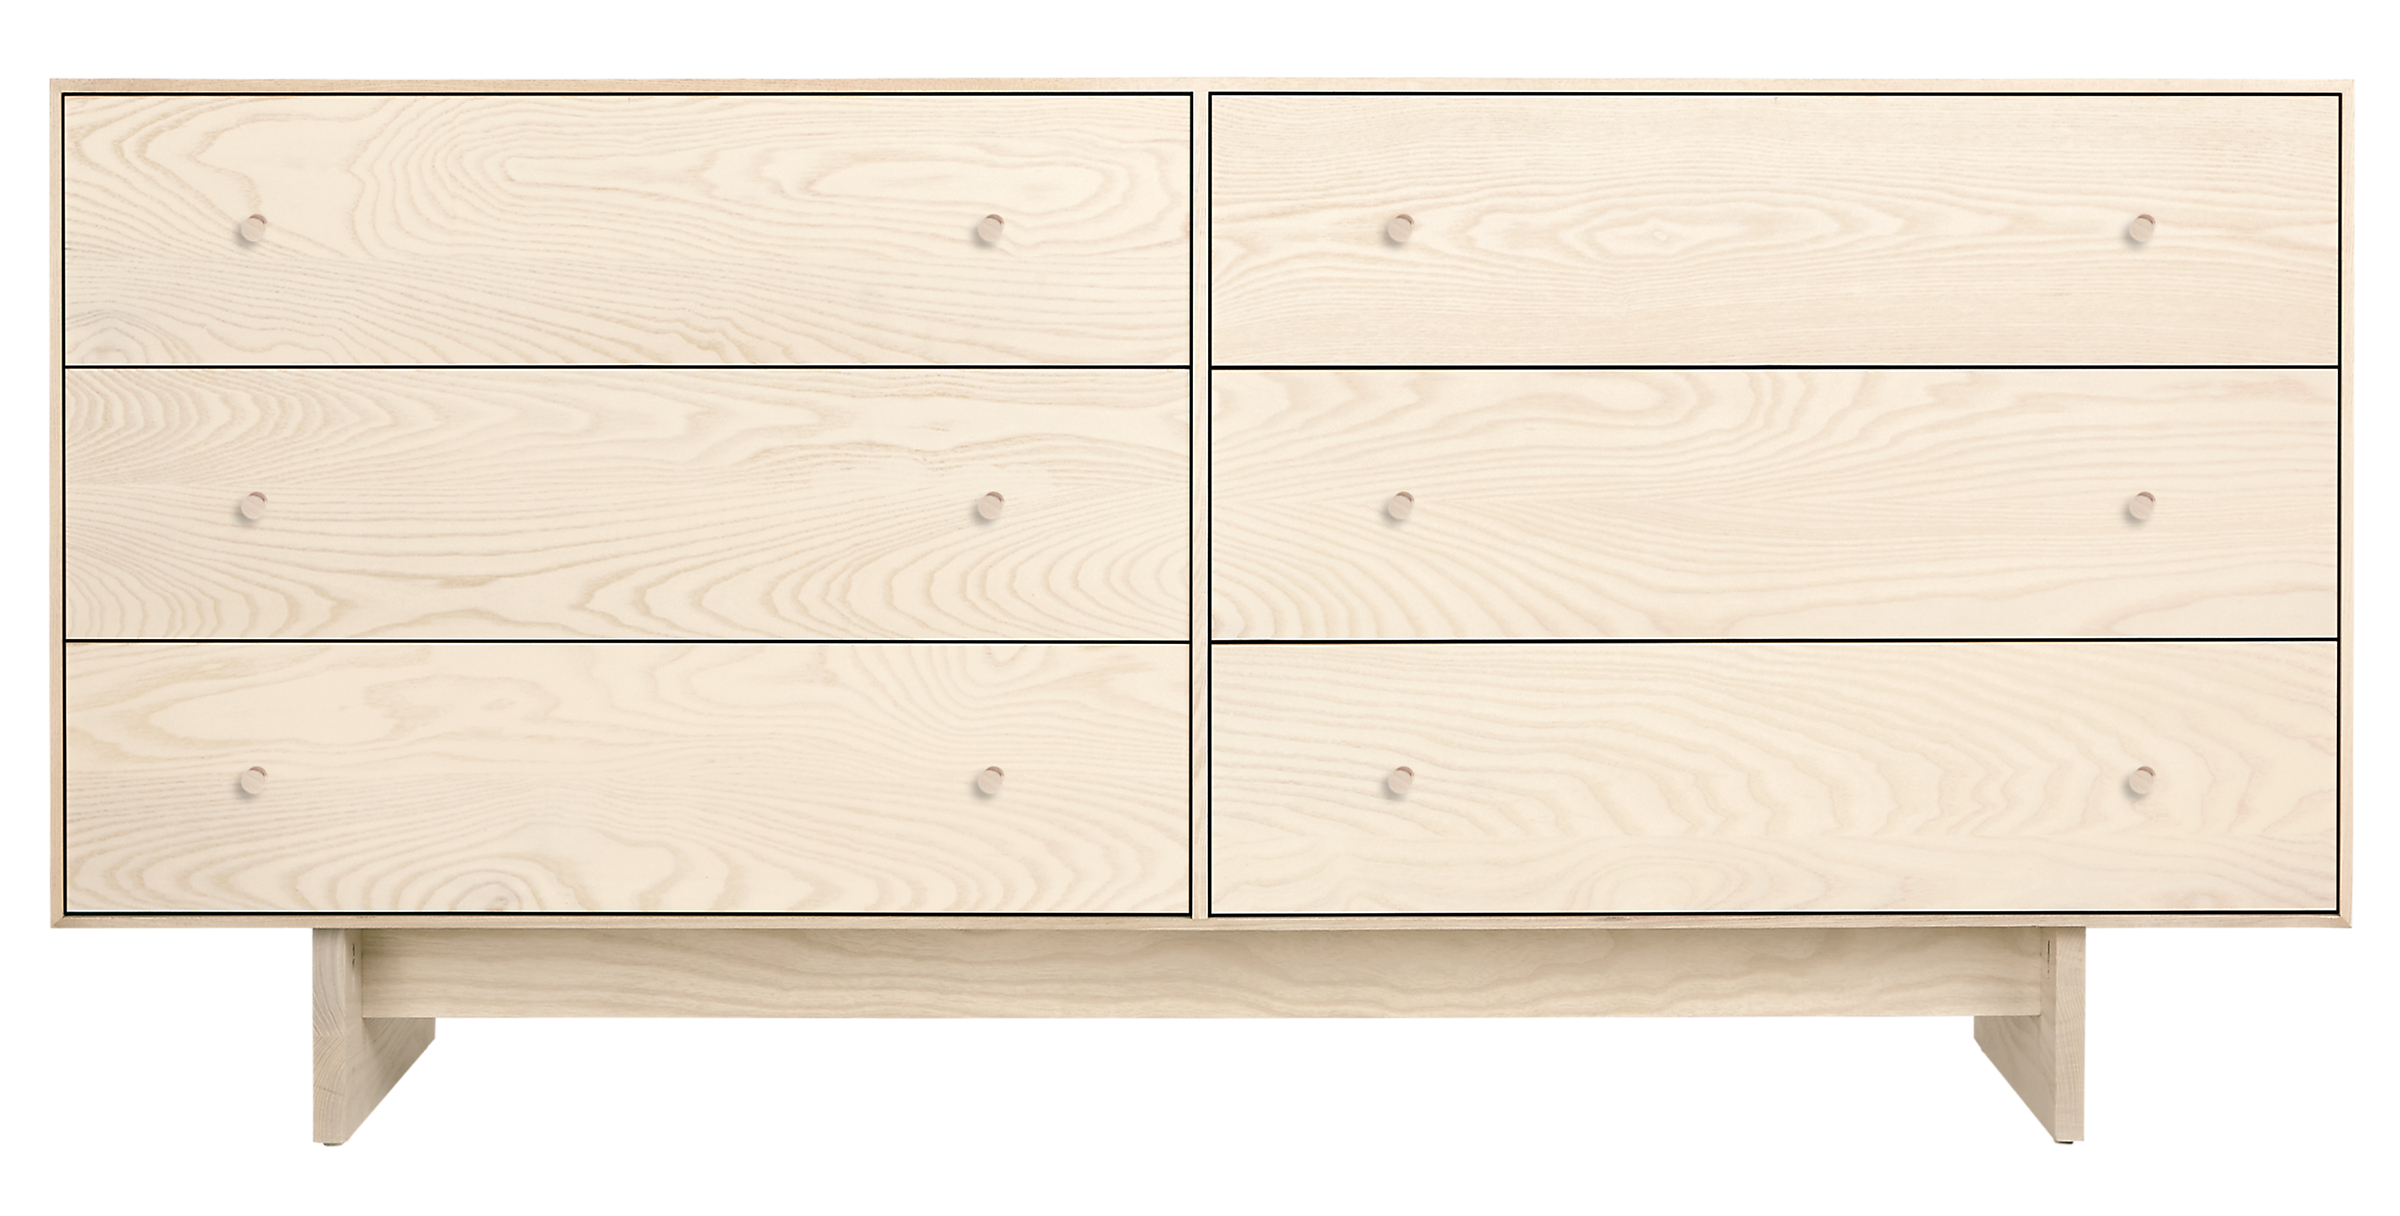 Hudson 60w 20d 28h Six-Drawer Dresser with Wood Base